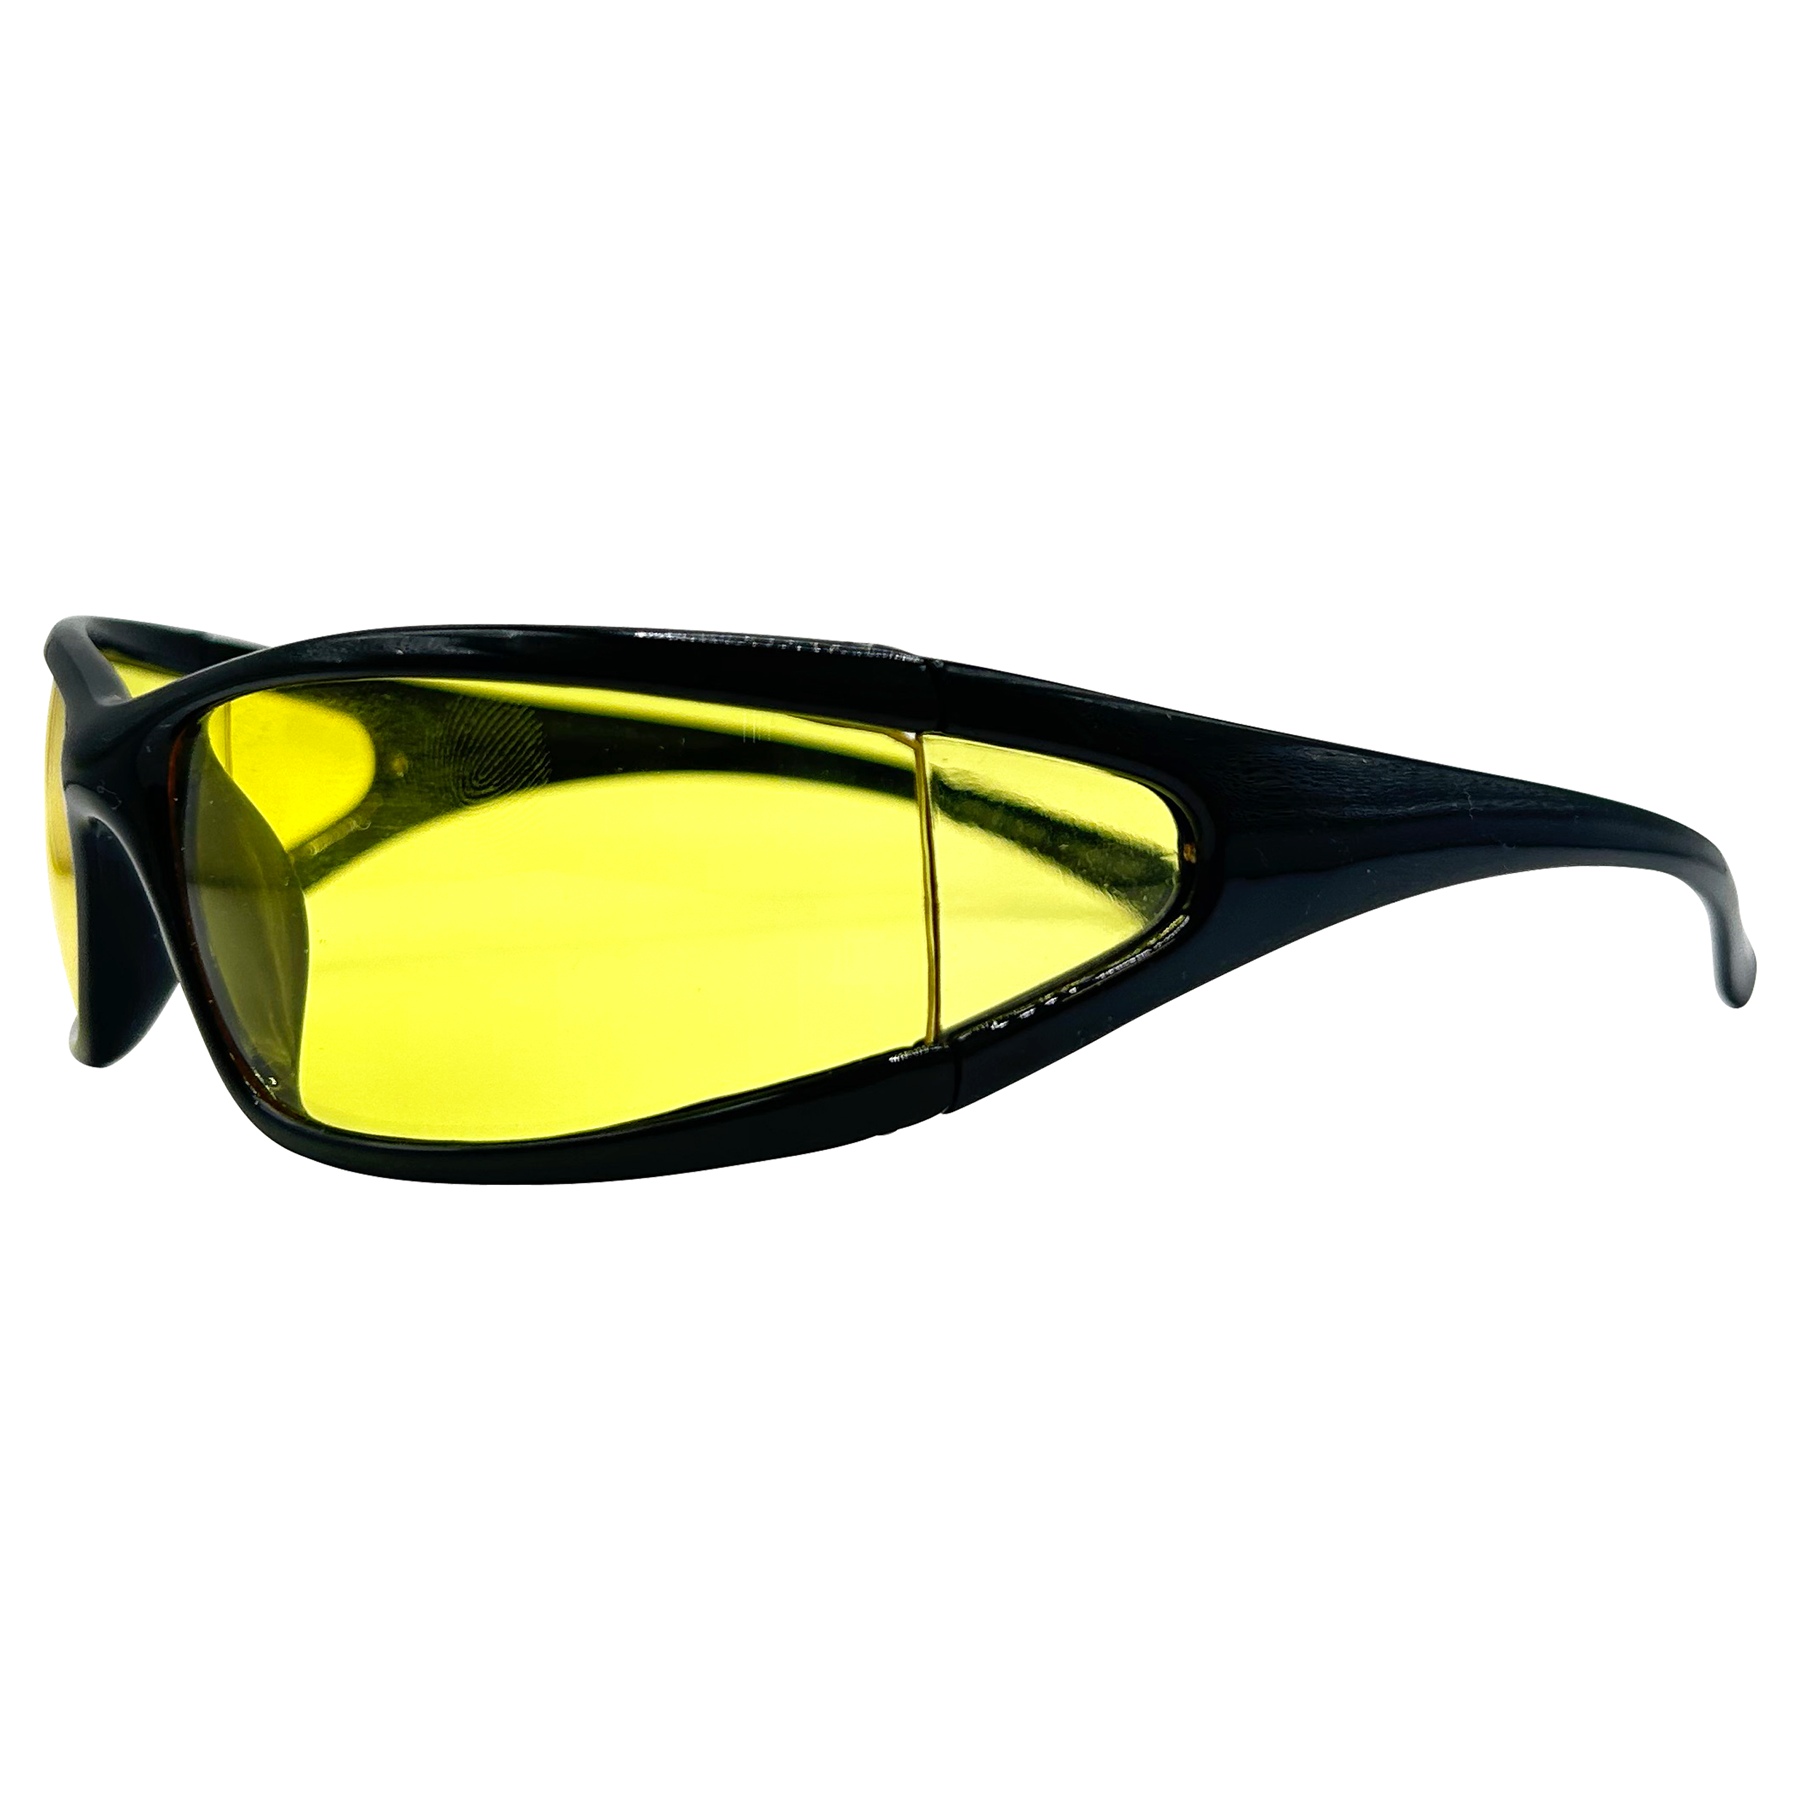 VITAMIN D Wraparound Sports Sunglasses | Blue-Blocker | Day Driving